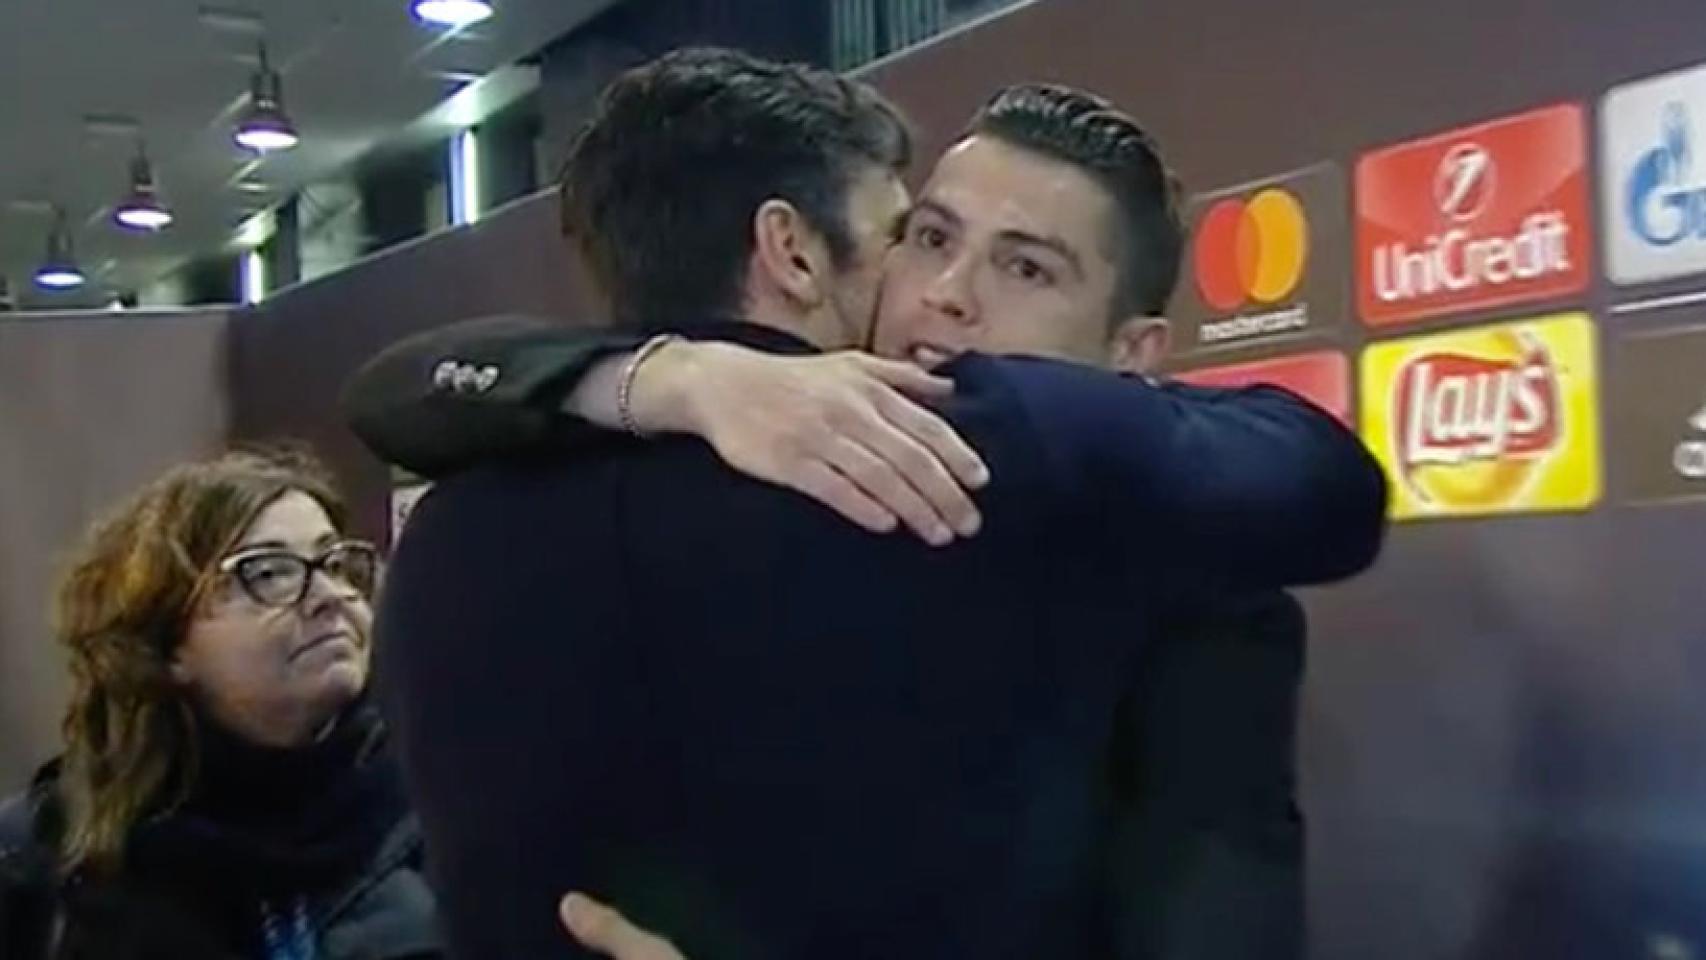 Abrazo de Cristiano a Buffon tras el partido